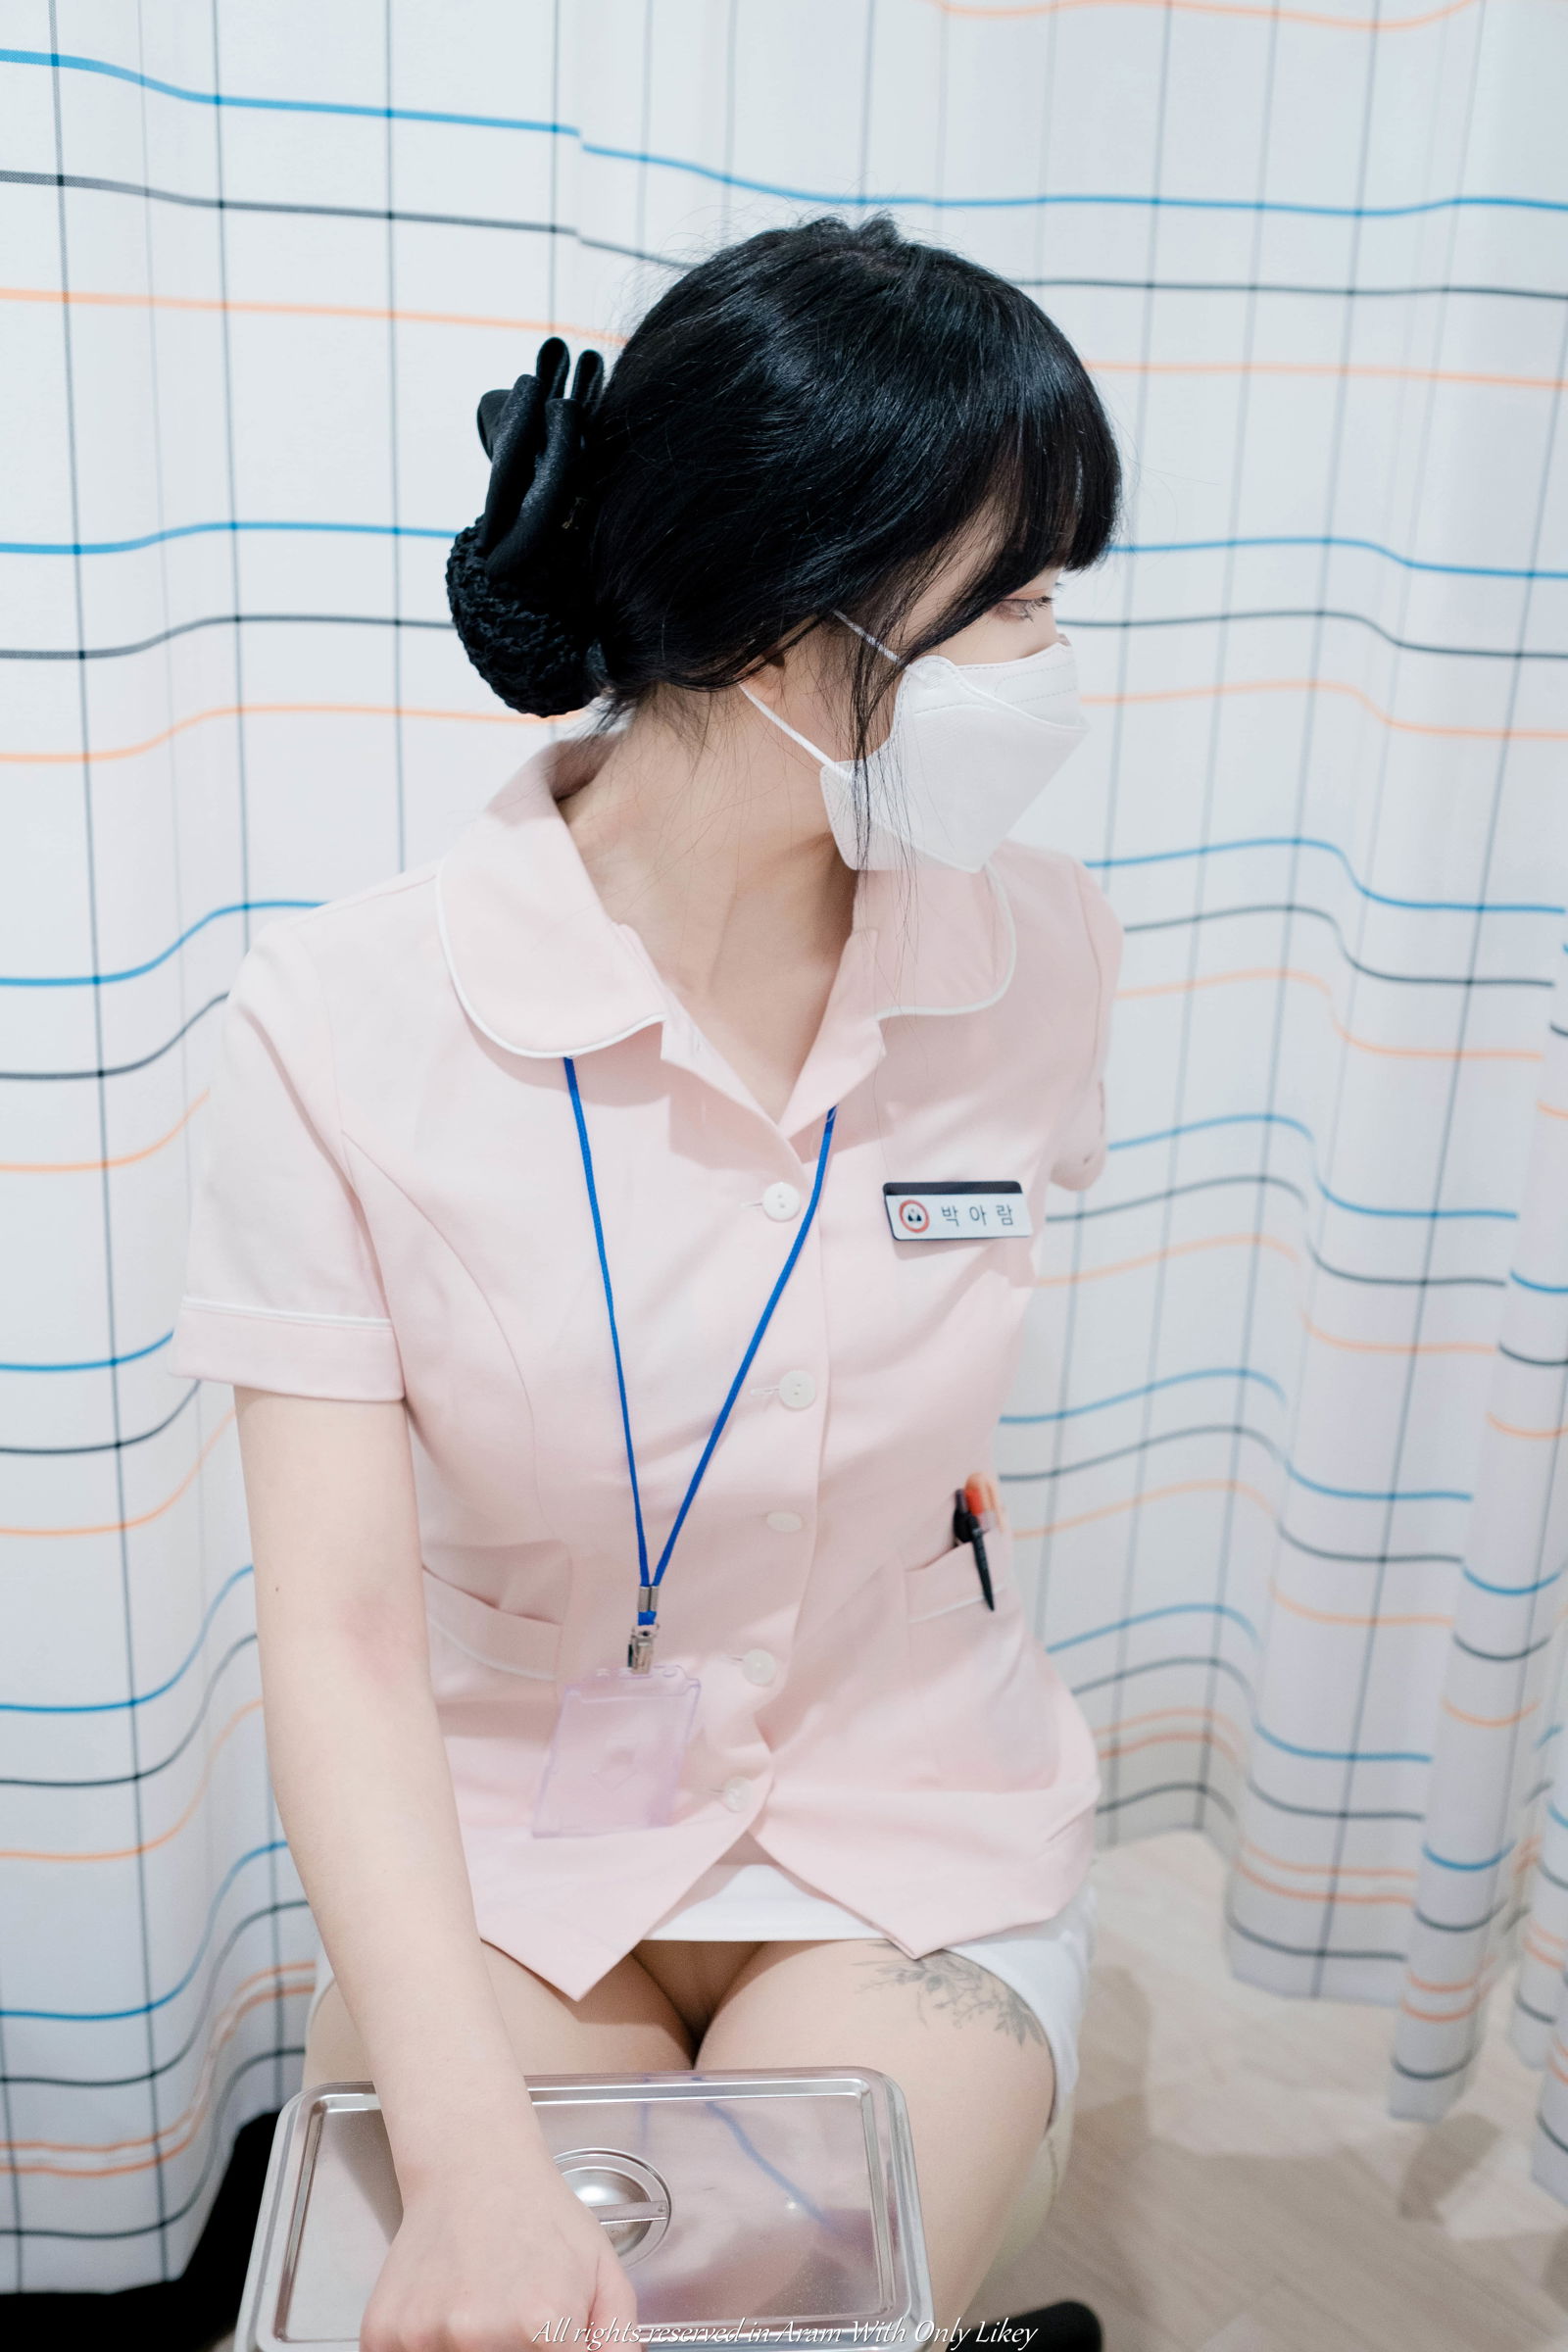 Aram(아람) NO.016 LIKEY A urologist Nurse [55P 902.63MB] - 在线看可下载原图